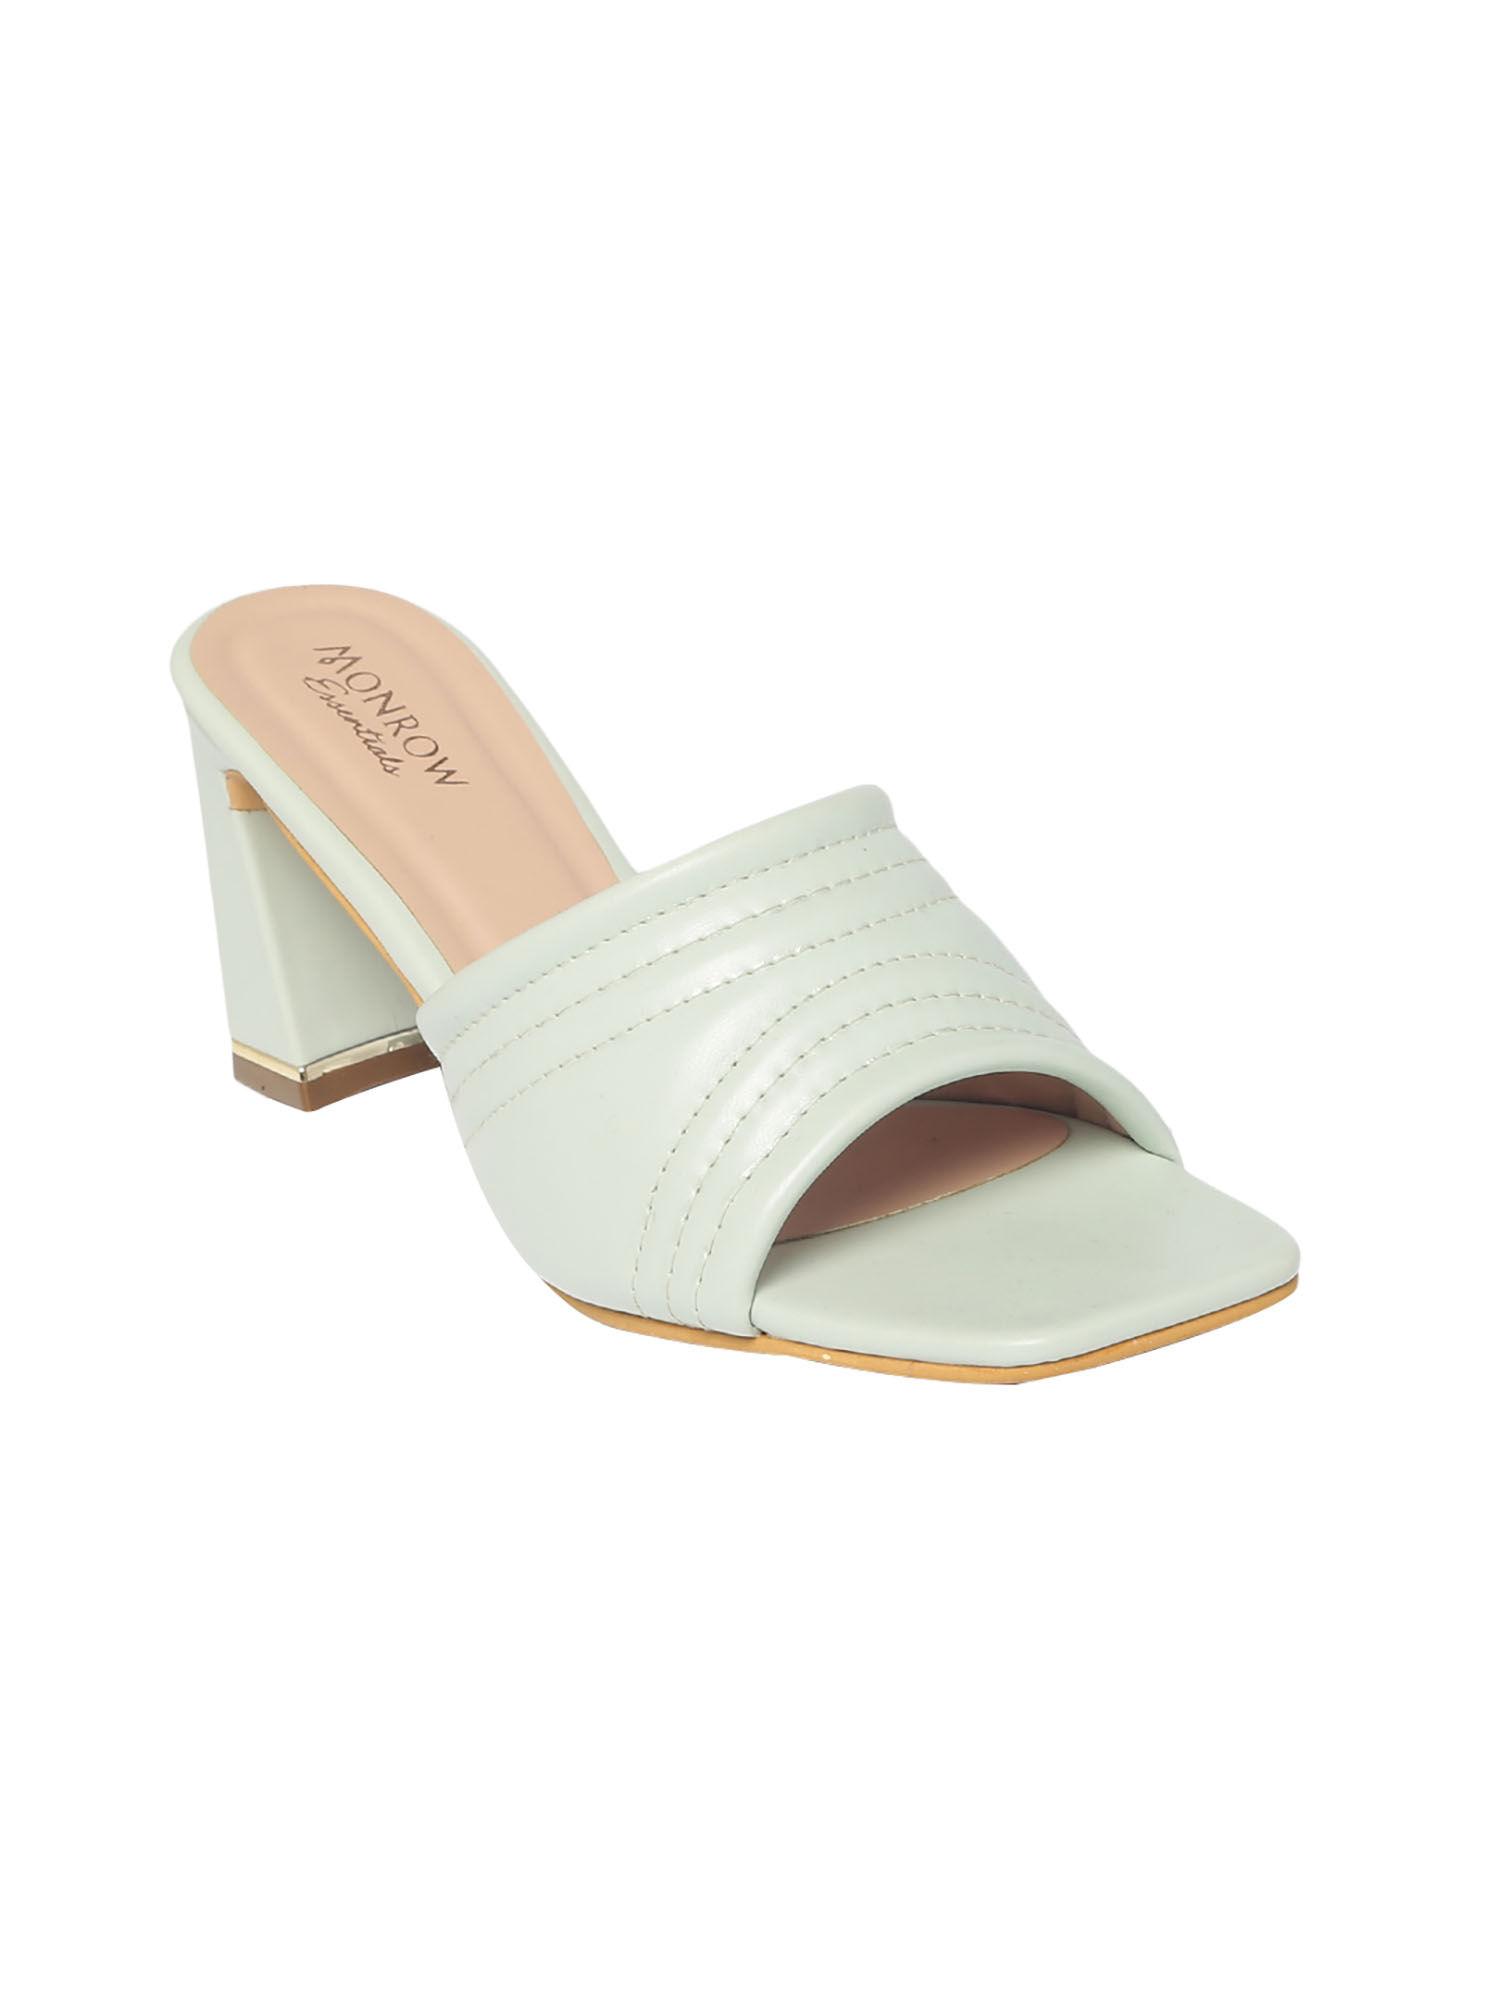 solid-plain teal block heels